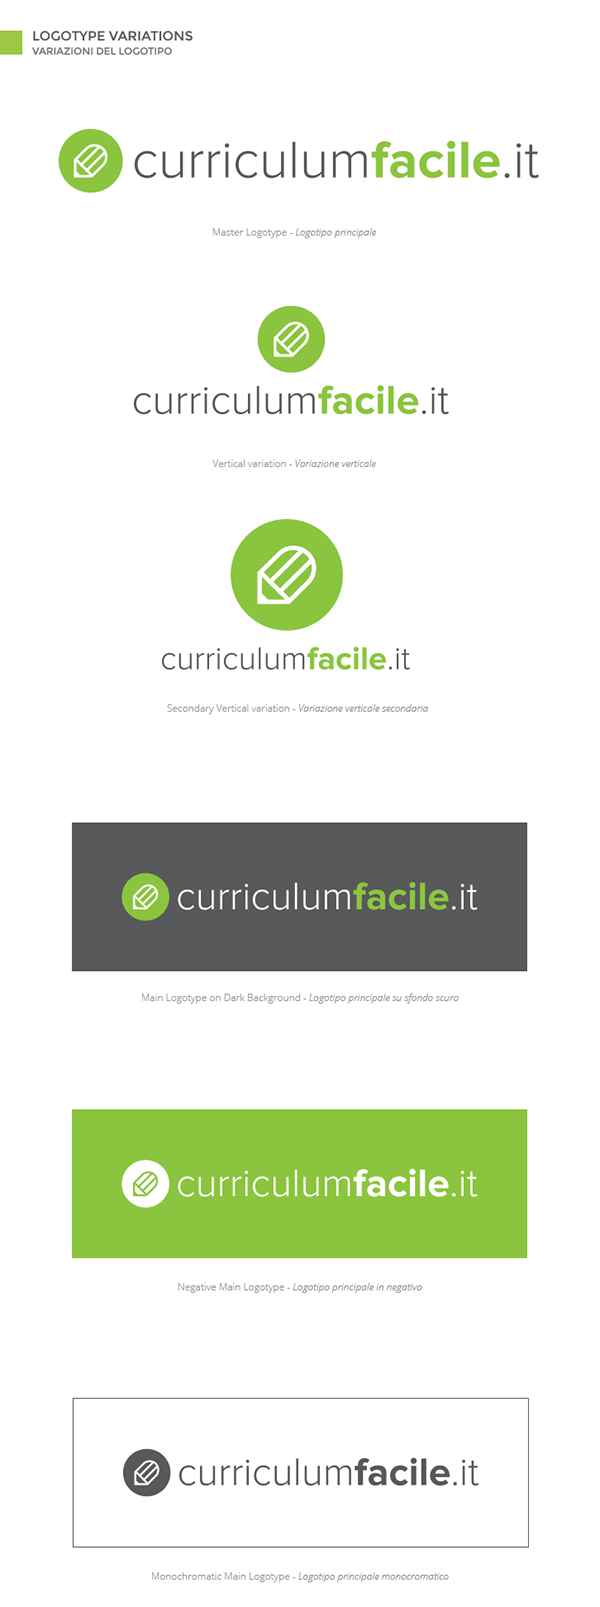 curriculumfacile Resume Logo Design Corporate Identity Stationery brand guidelines booklet Web Identity